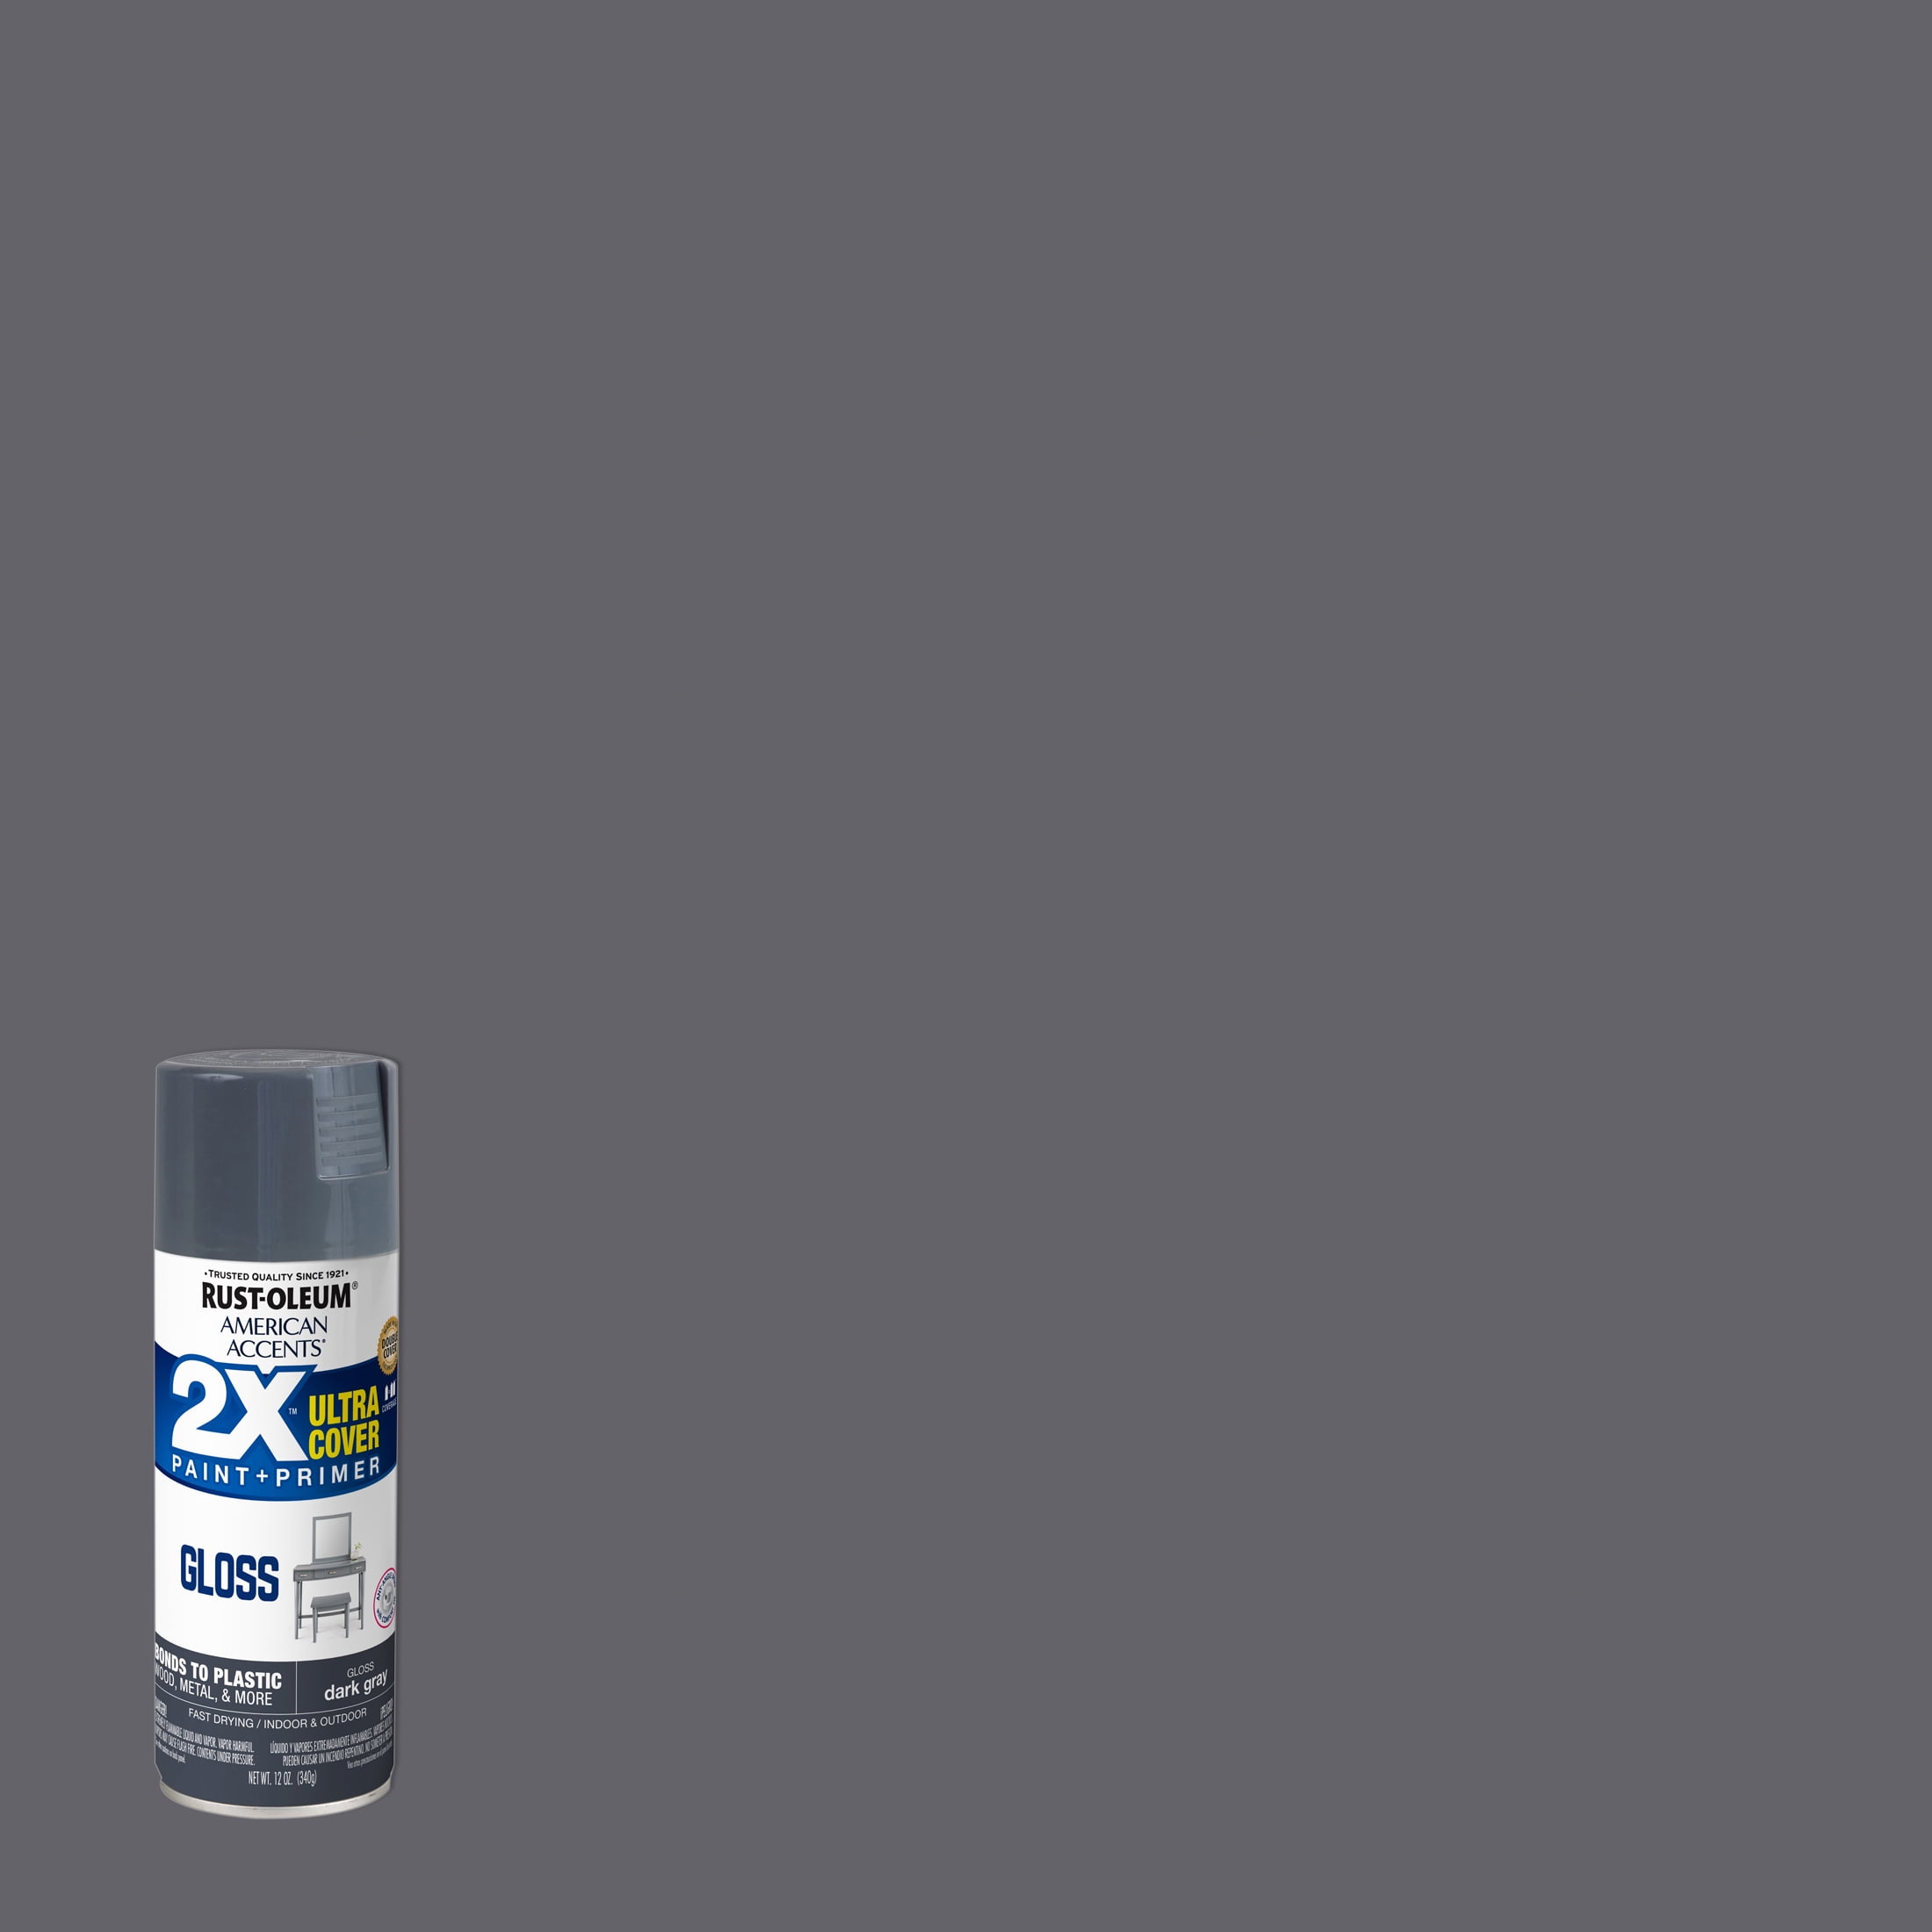 Dark Gray, Rust-Oleum American Accents 2X Ultra Cover Gloss Spray Paint- 12 oz